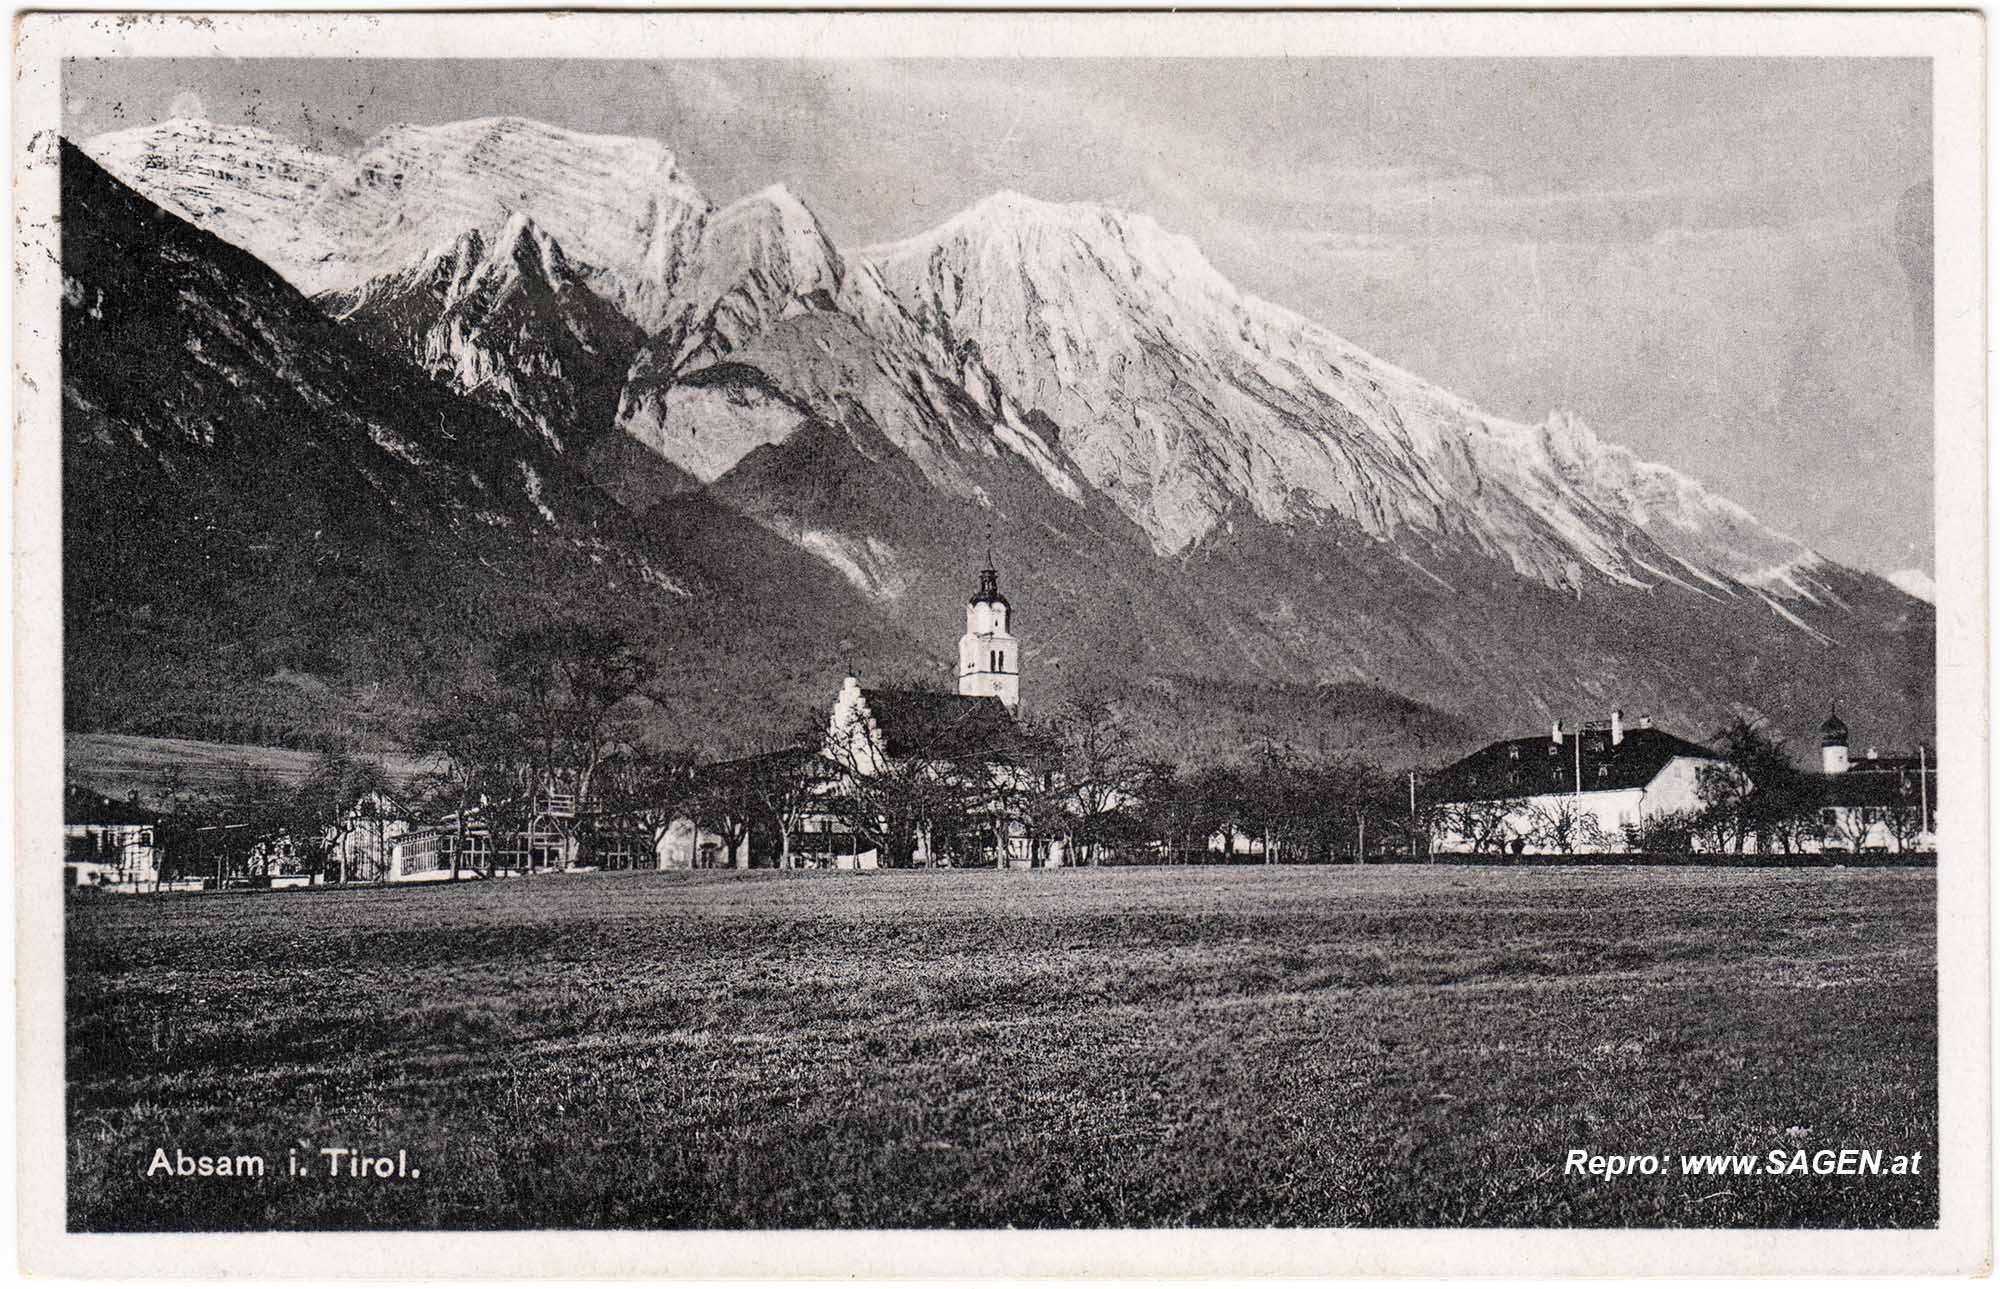 Absam in Tirol